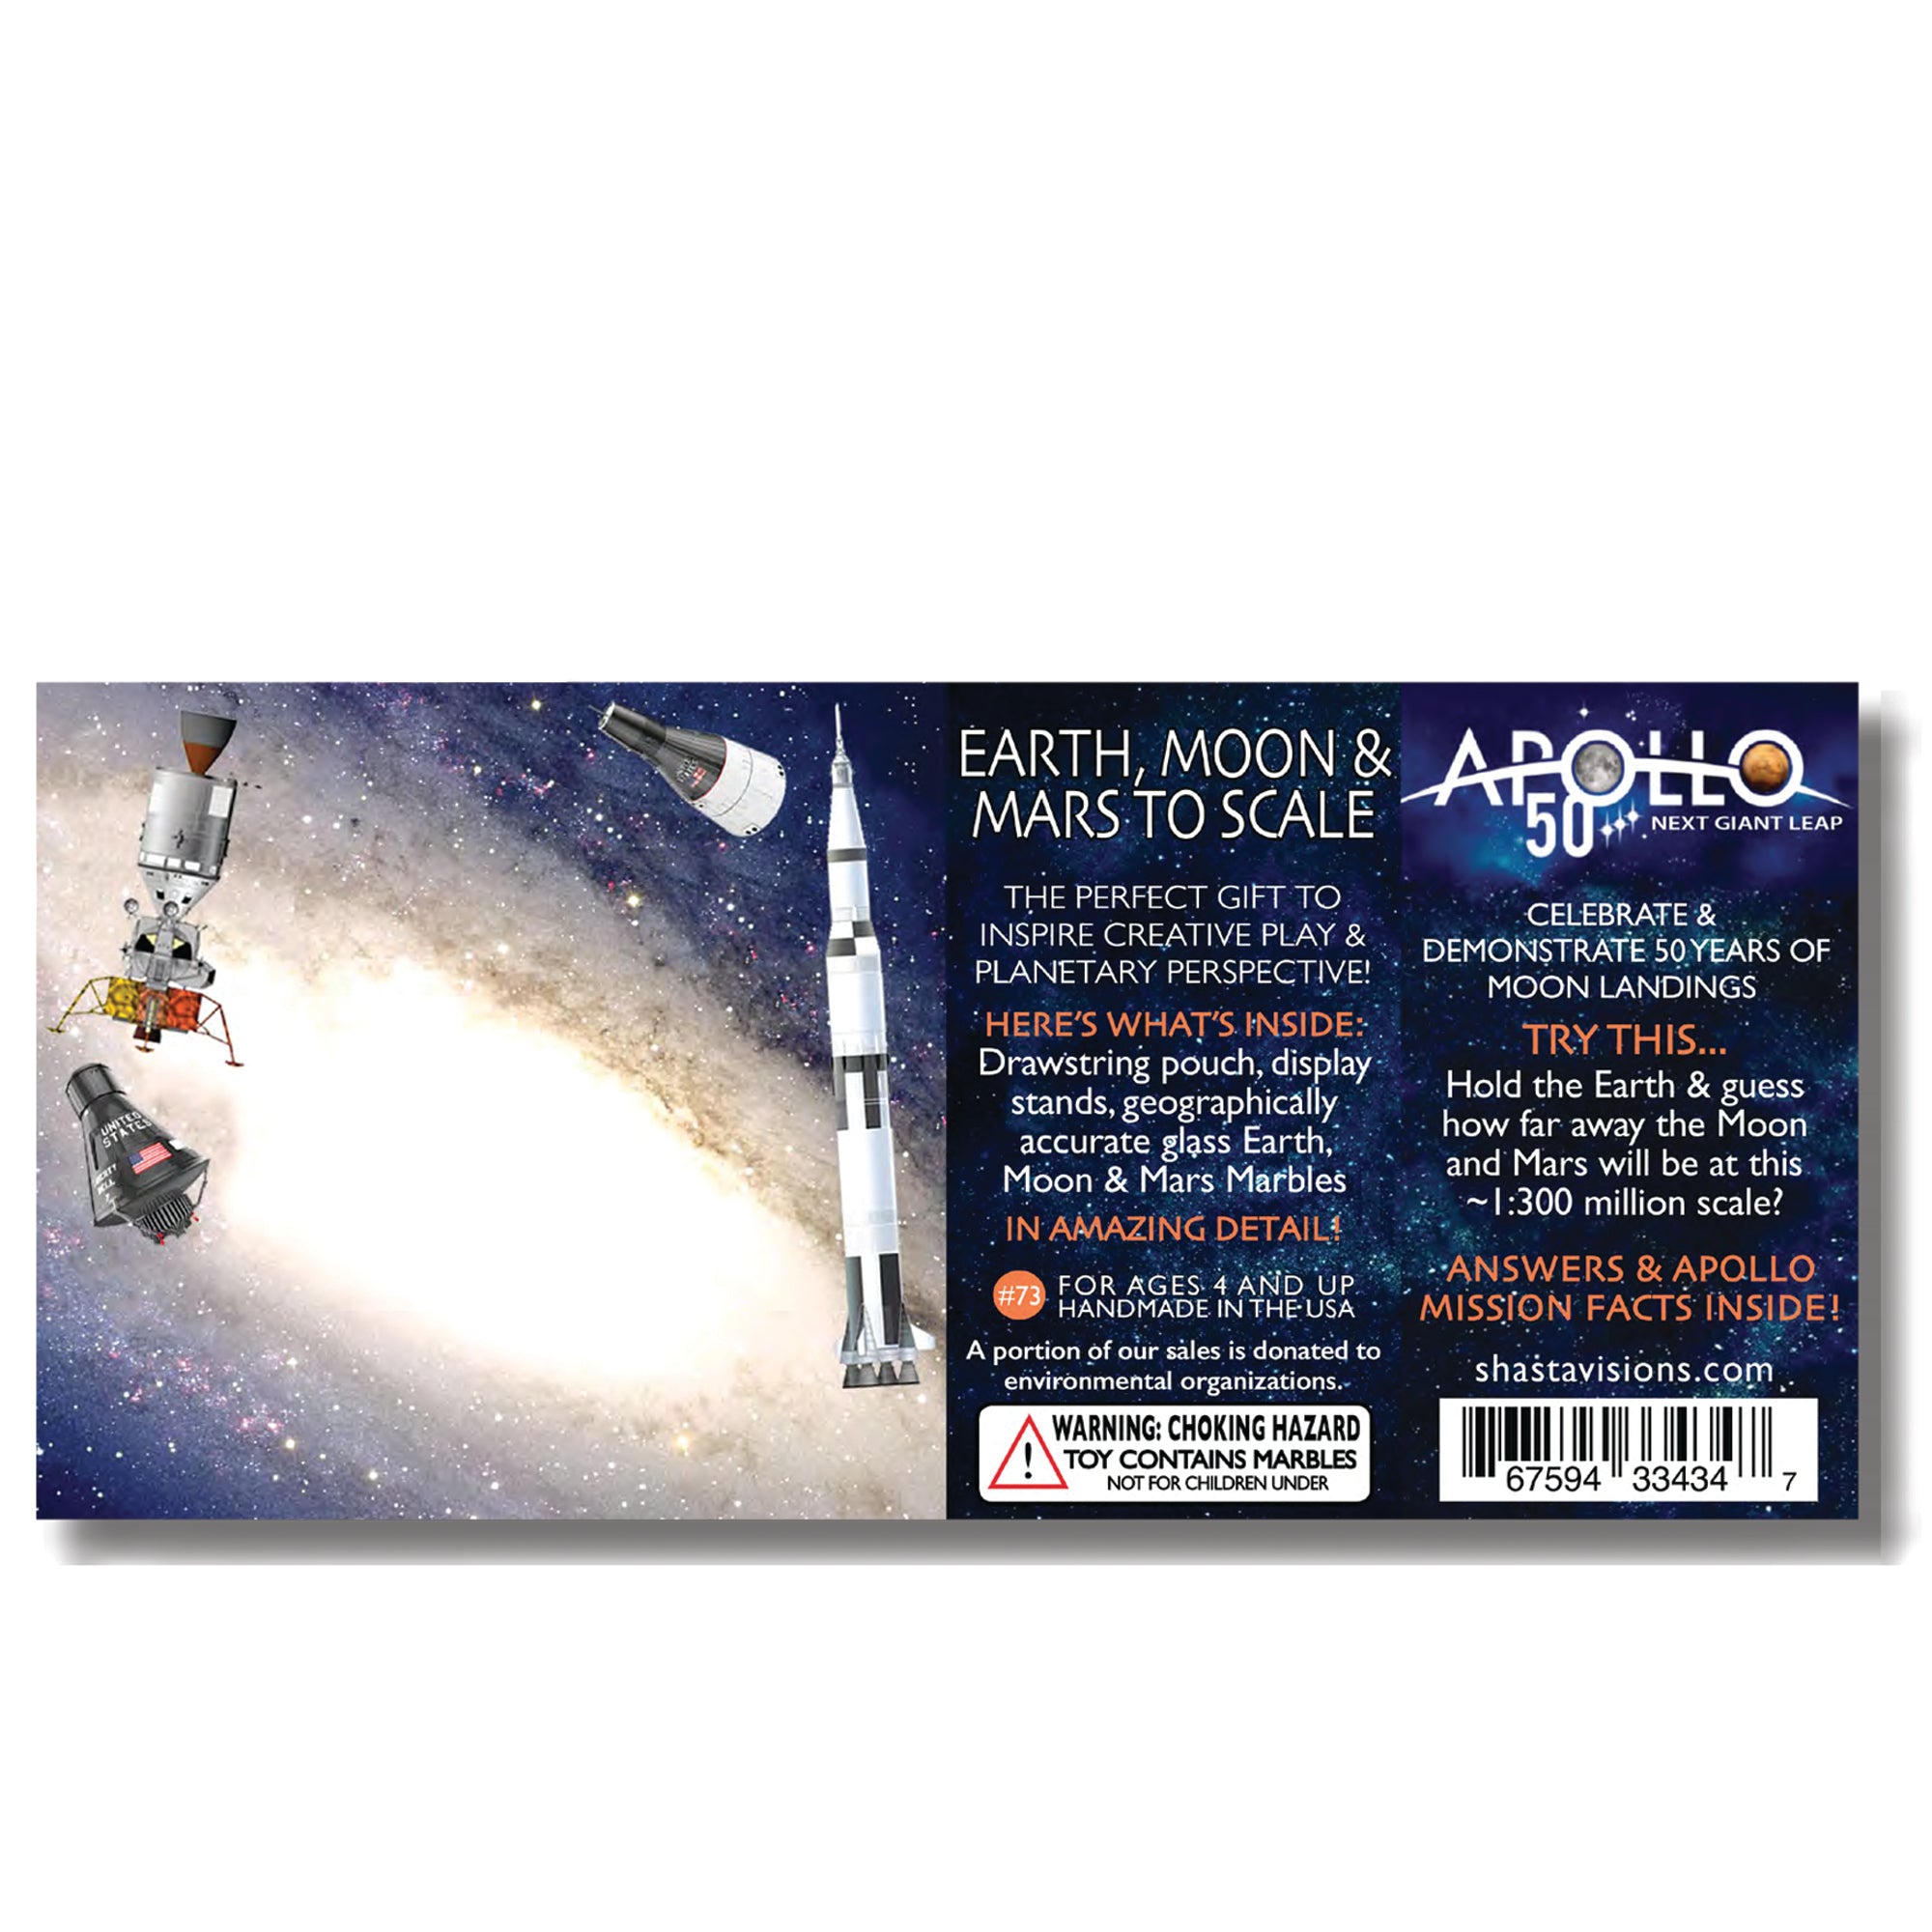 Apollo 50th Anniversary Edition of Earth, Moon & Mars To Scale Box Set